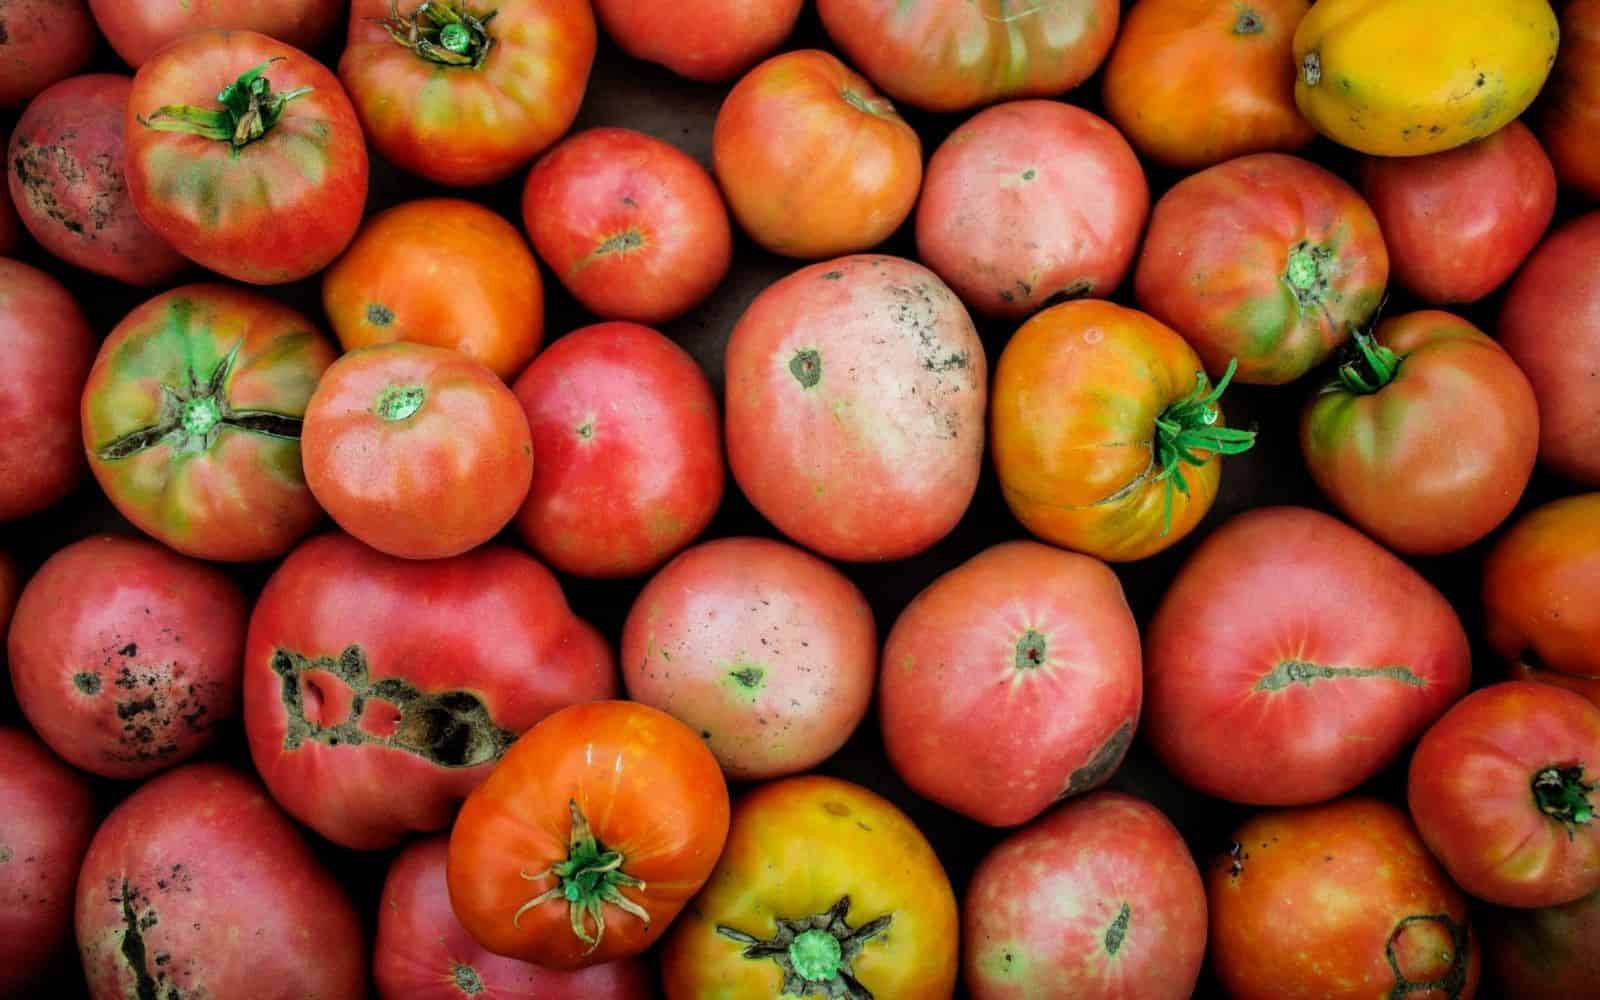 Sweet heirloom tomatoes